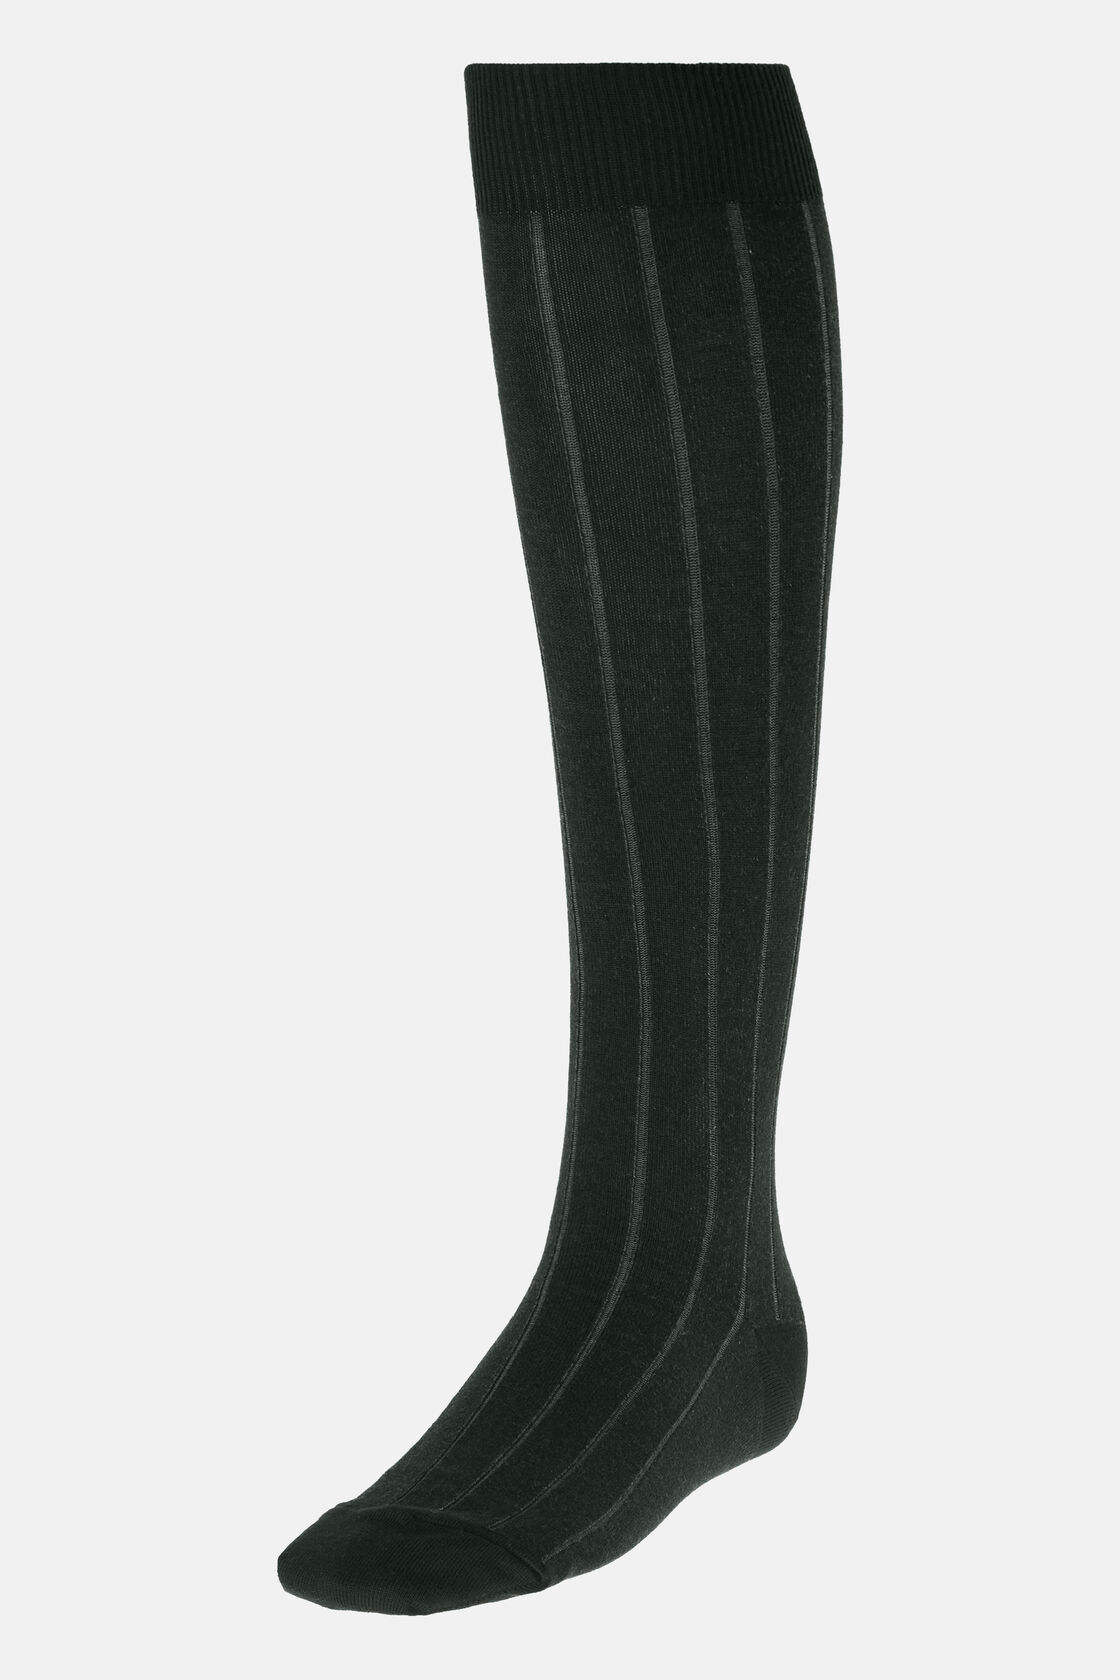 Vanise Rib Cotton Blend Socks, Navy - Grey, hi-res